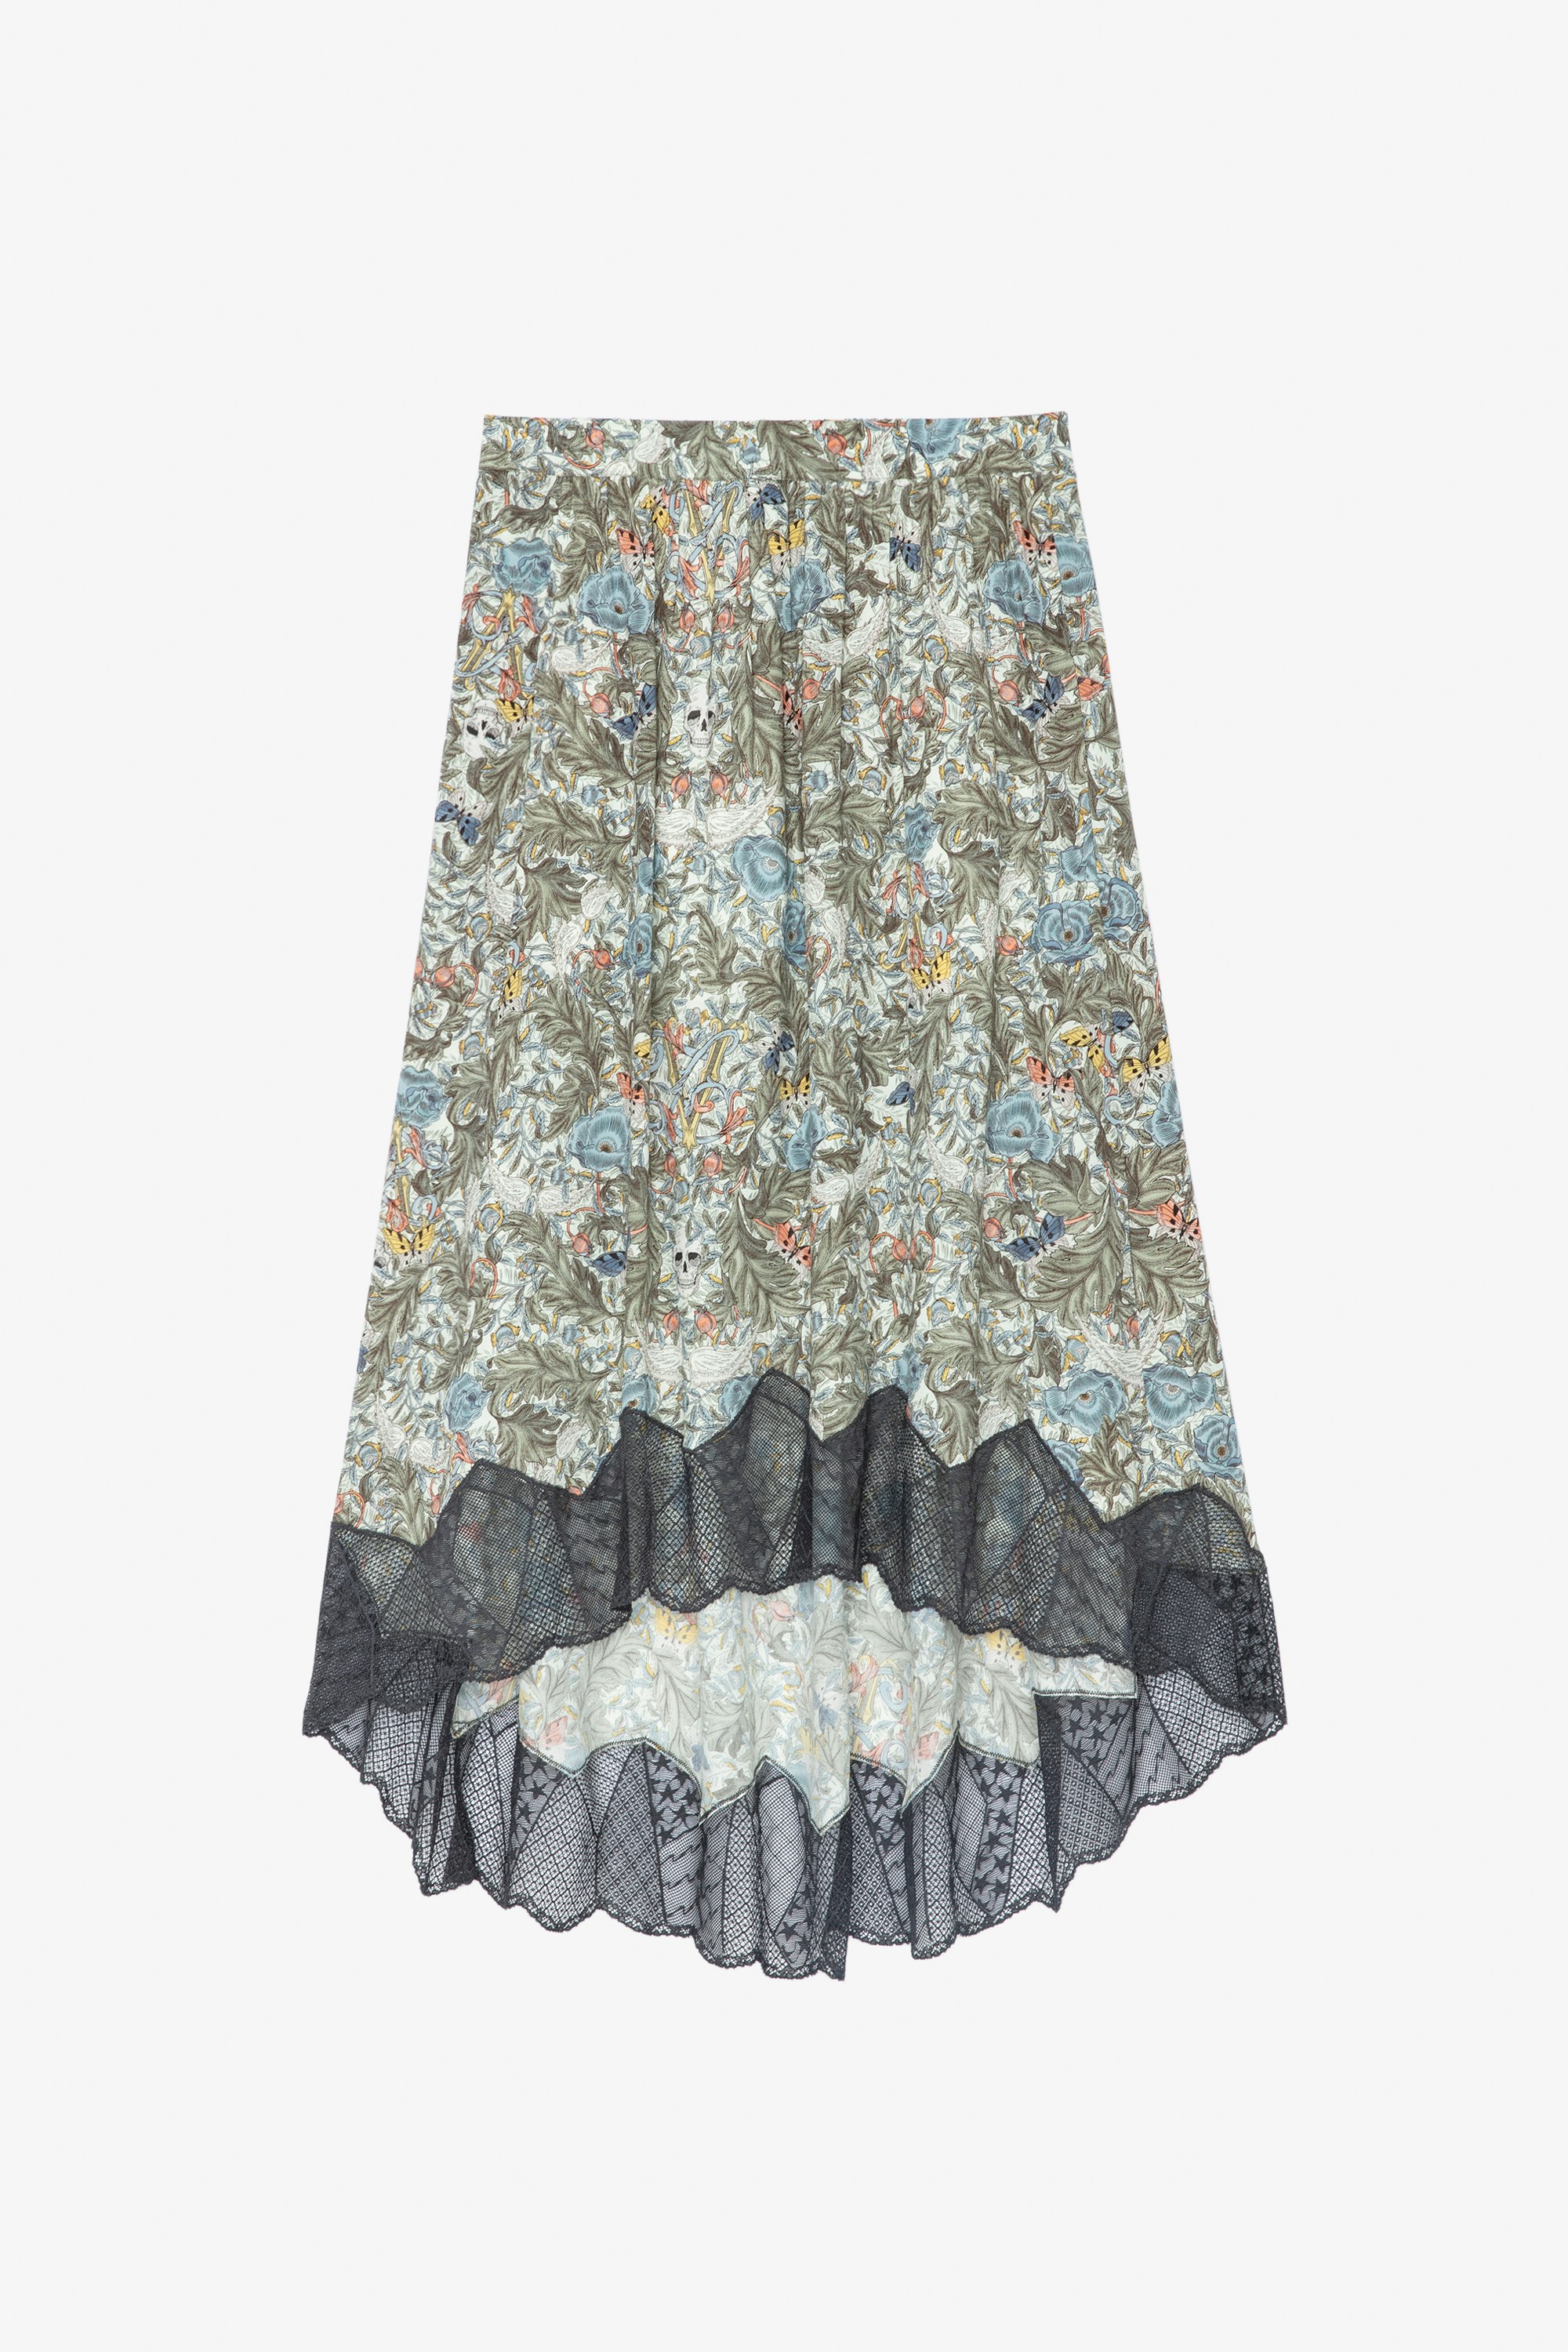 Joslin Skirt Women’s mid-length asymmetric khaki skirt with floral print, skull, and lace trim